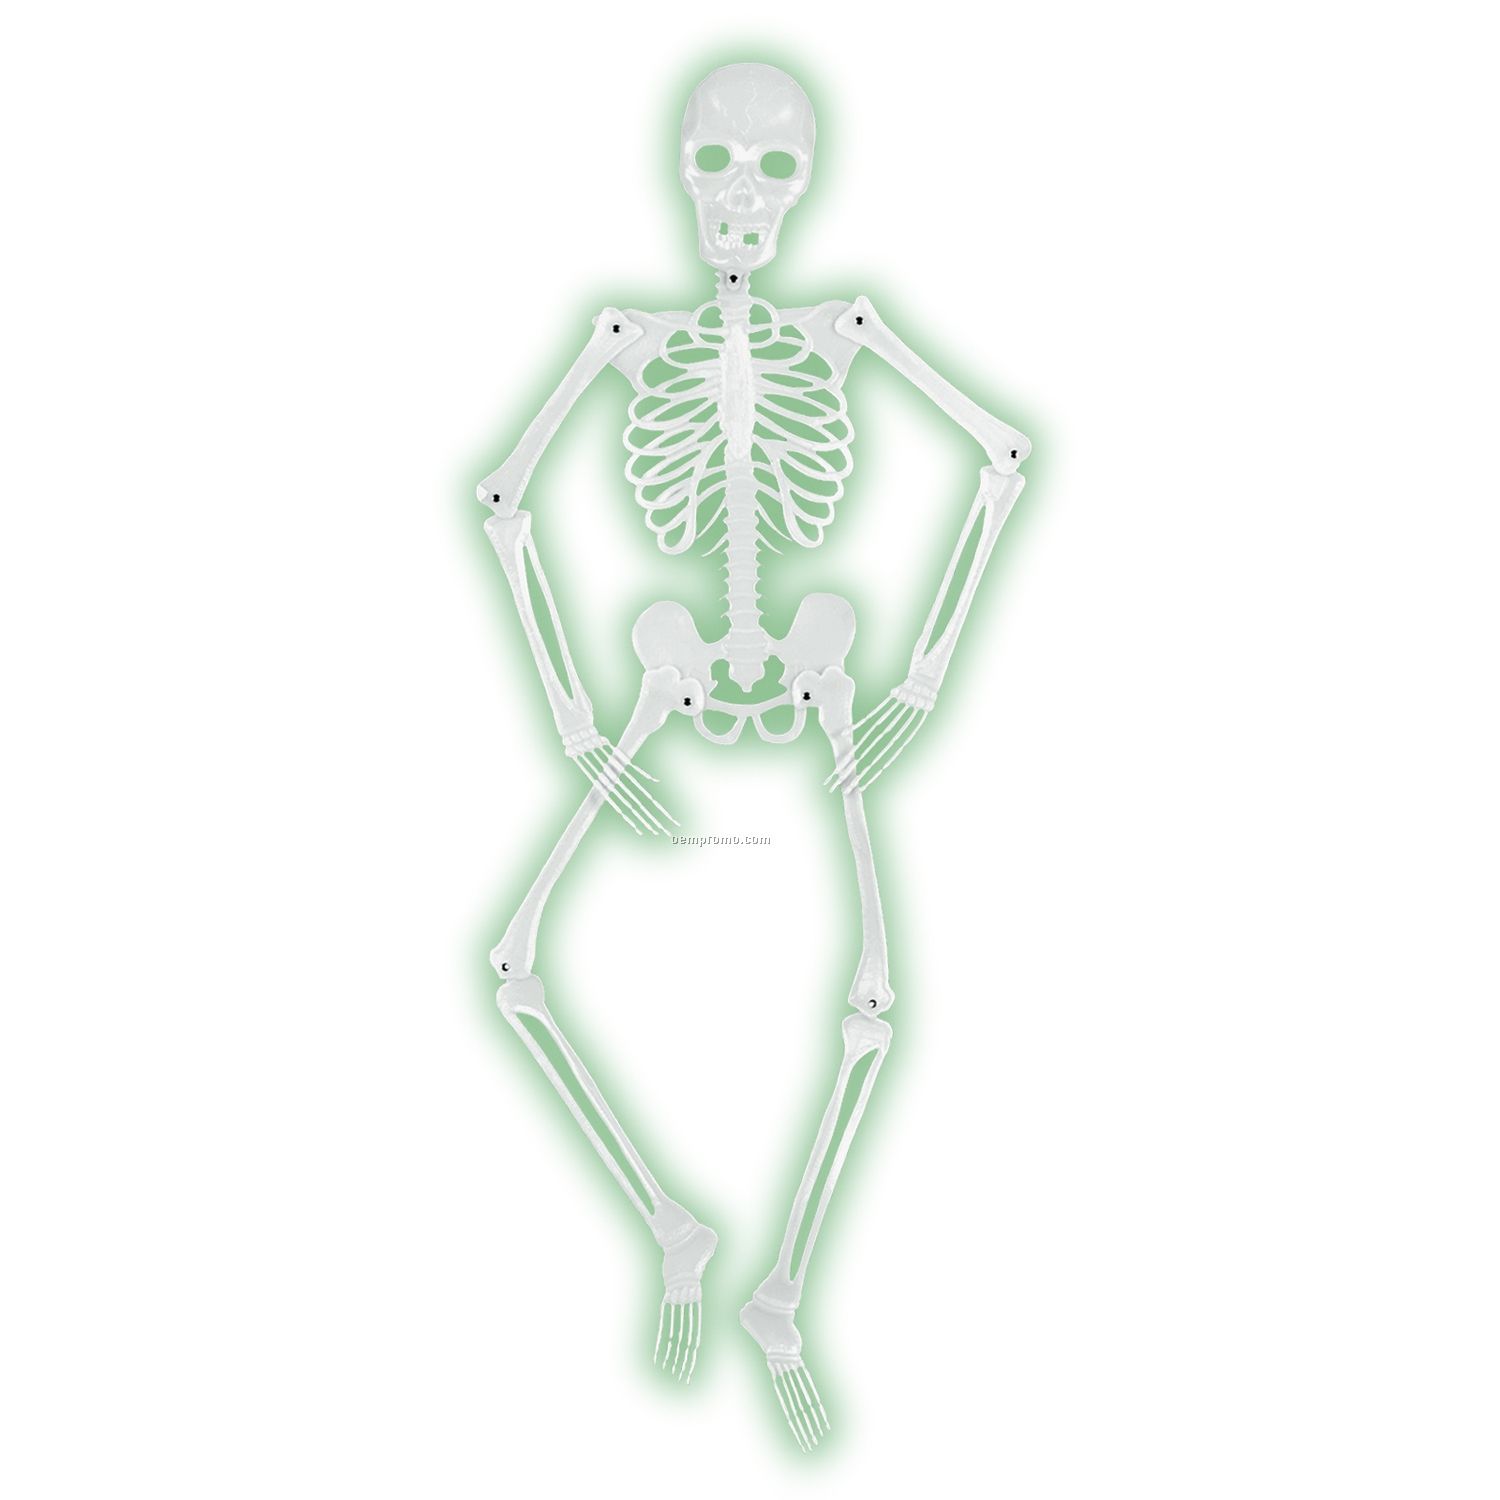 Mr. Bones-a-glo Skeleton